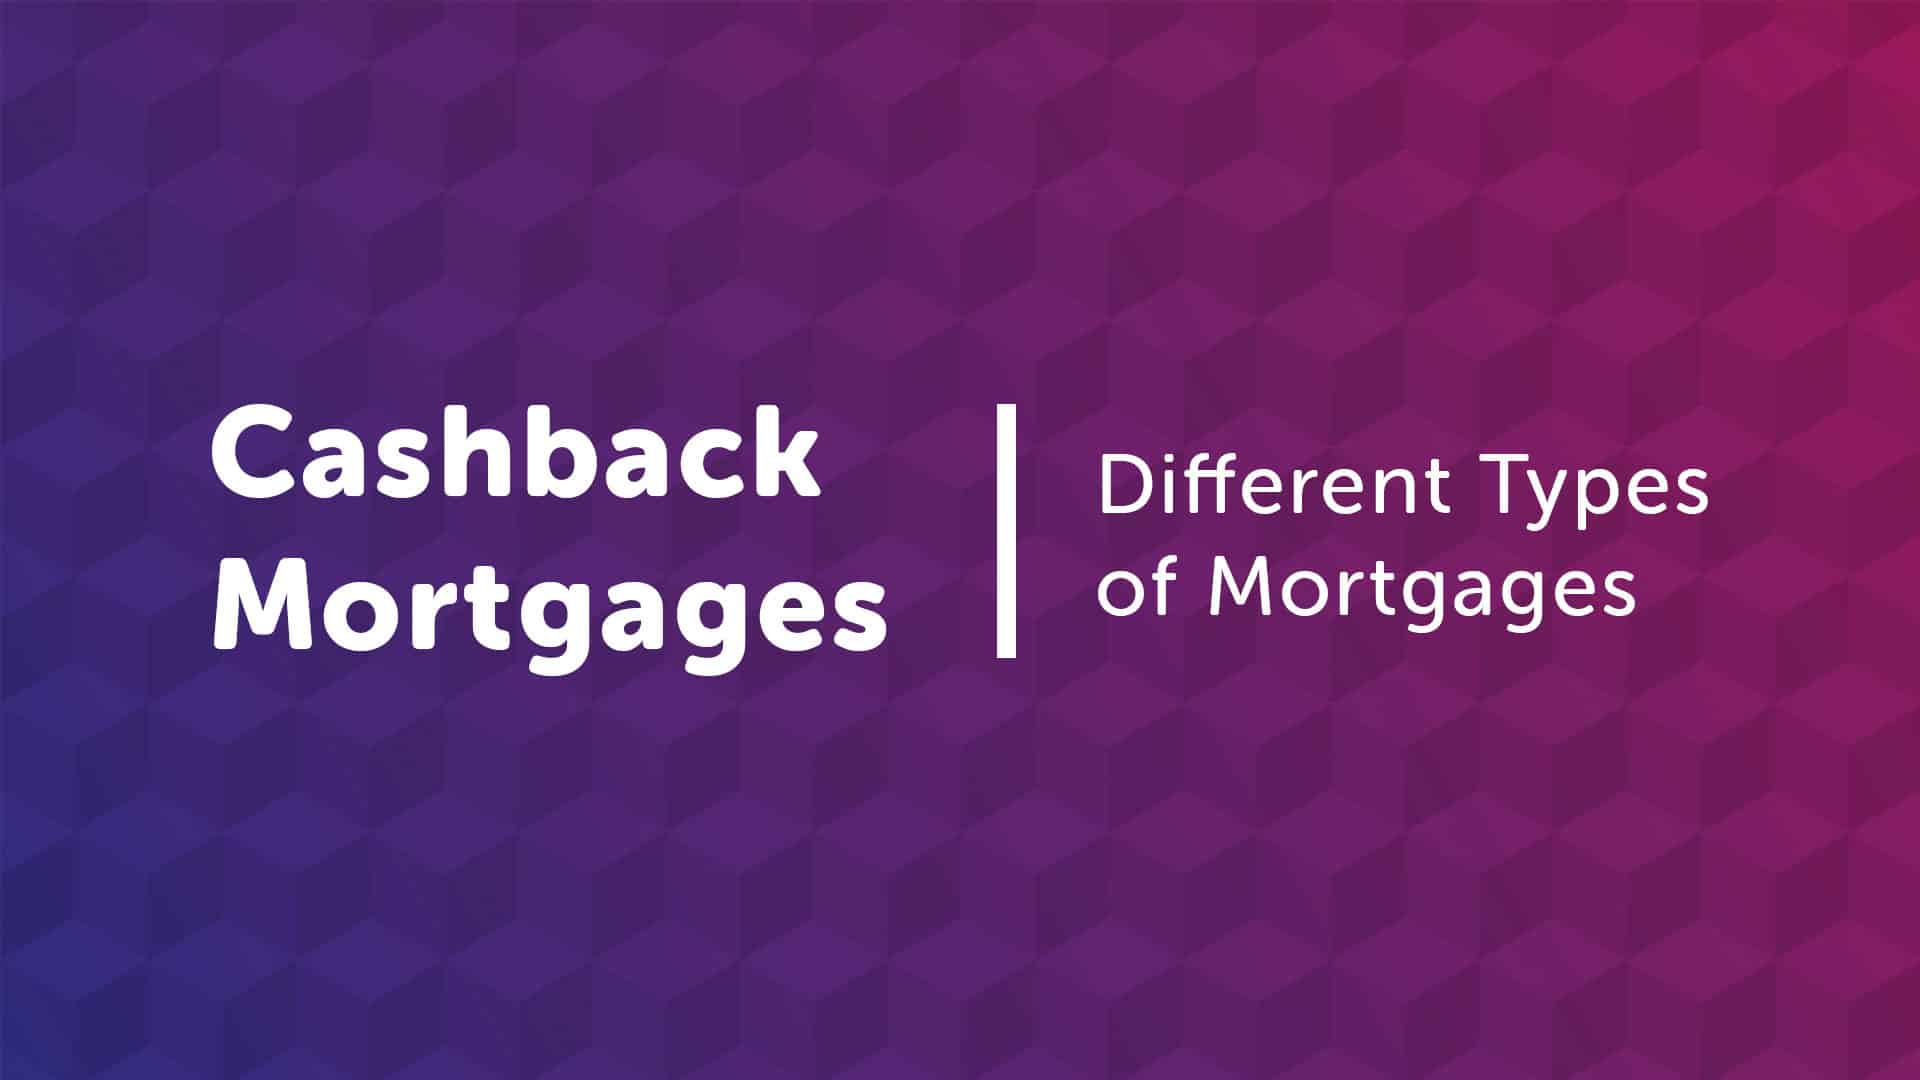 Cashback Mortgage in Harrogate